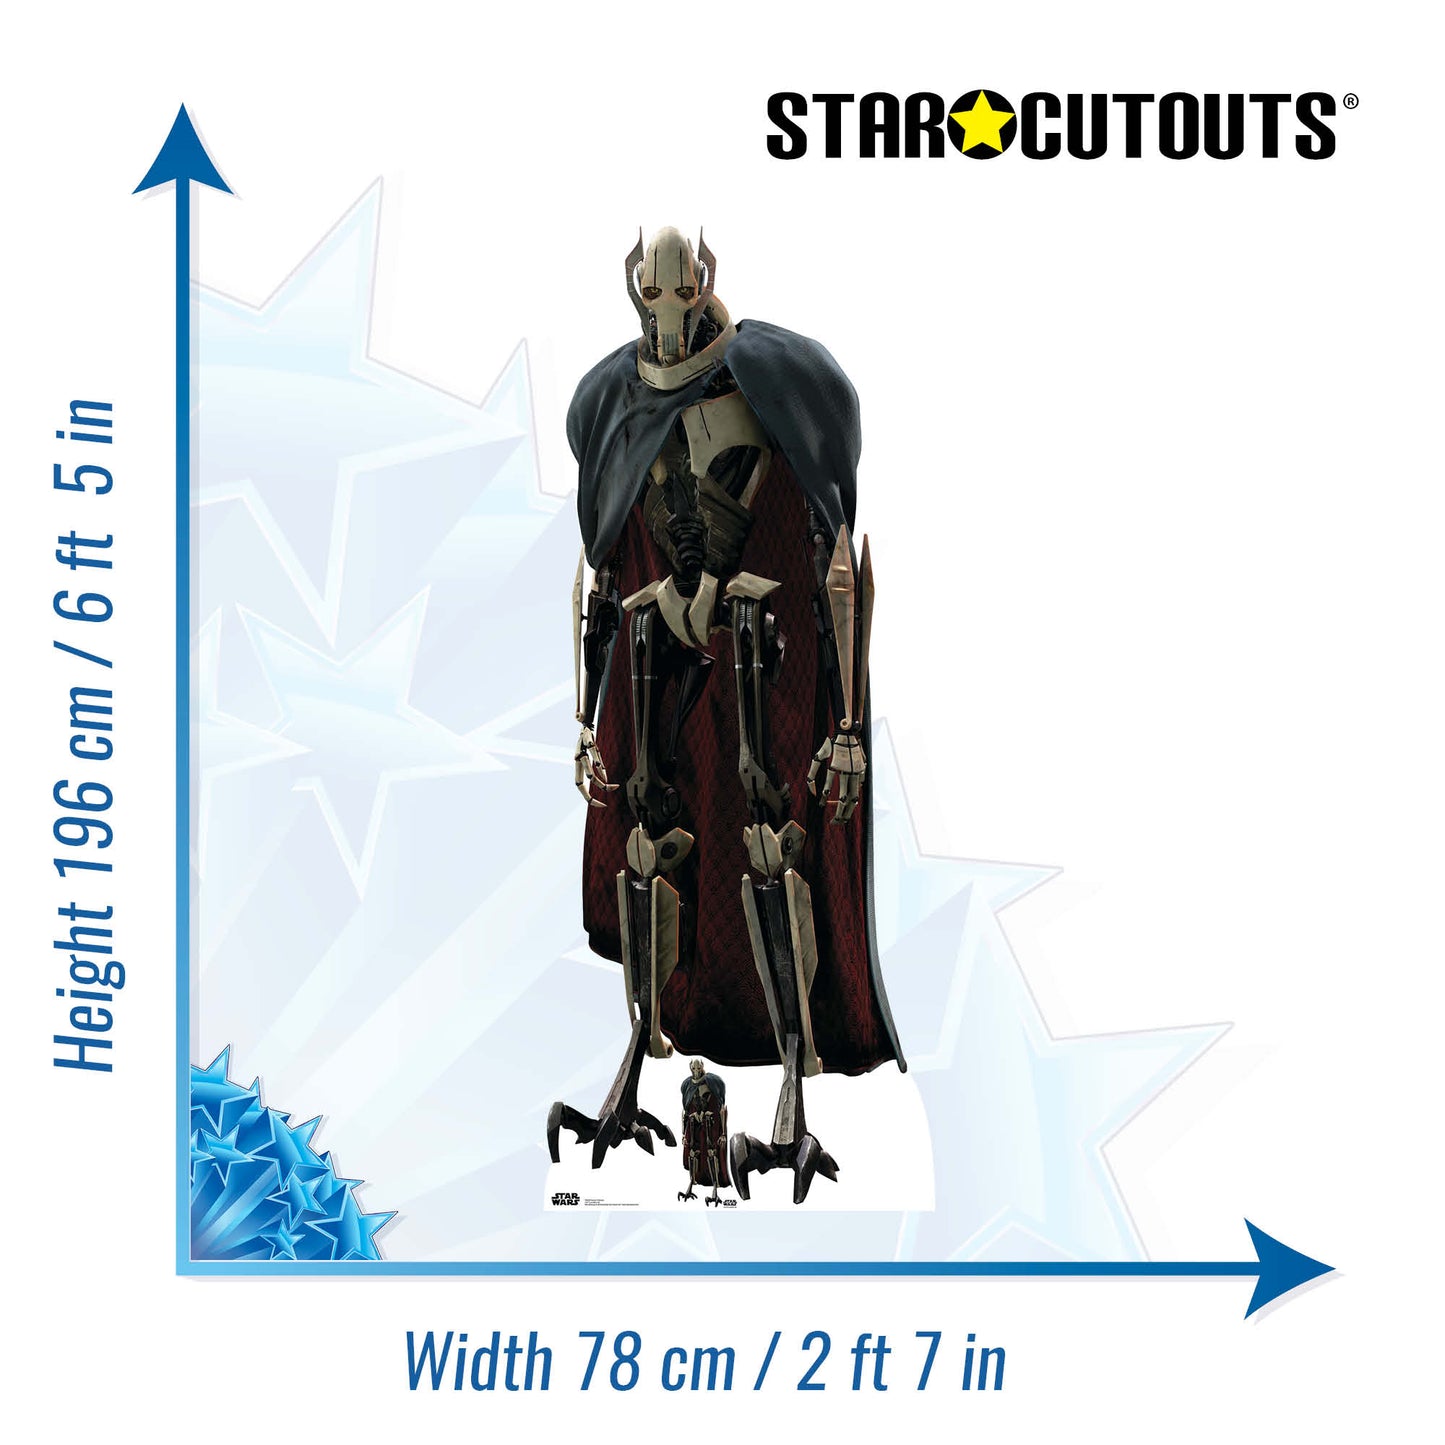 General Grievous Star Wars Cardboard Cut Out Height 196cm